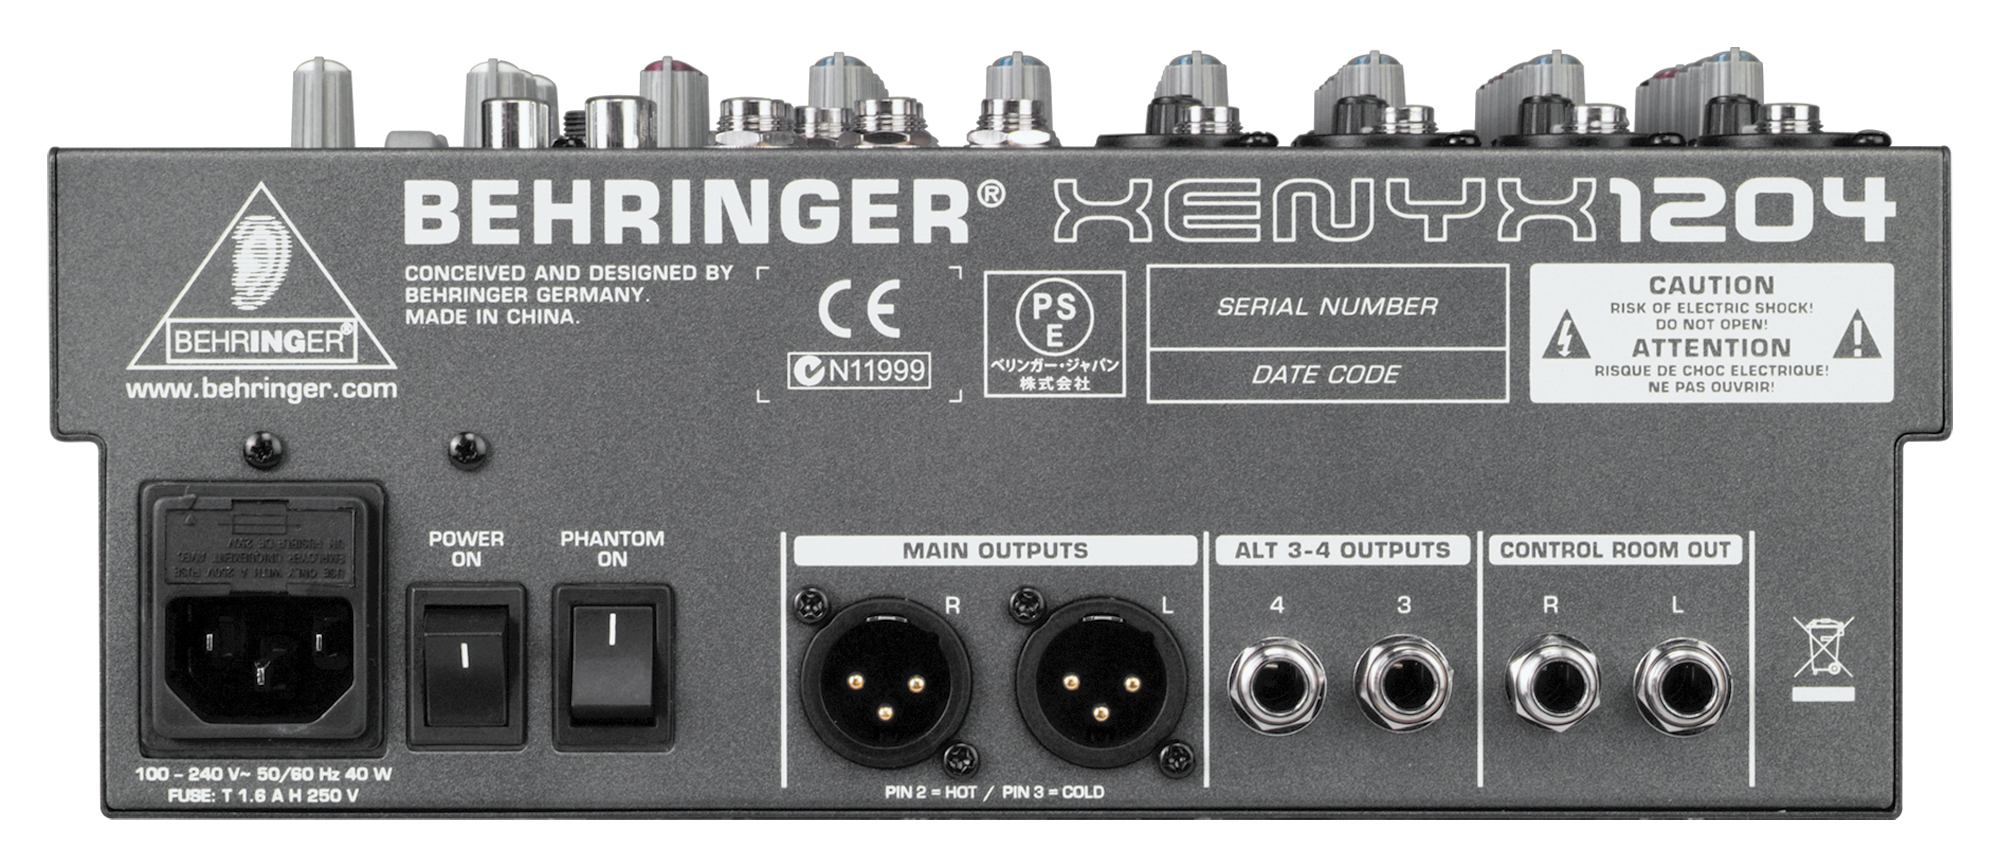 behringer xenyx x1204usb driver downloads